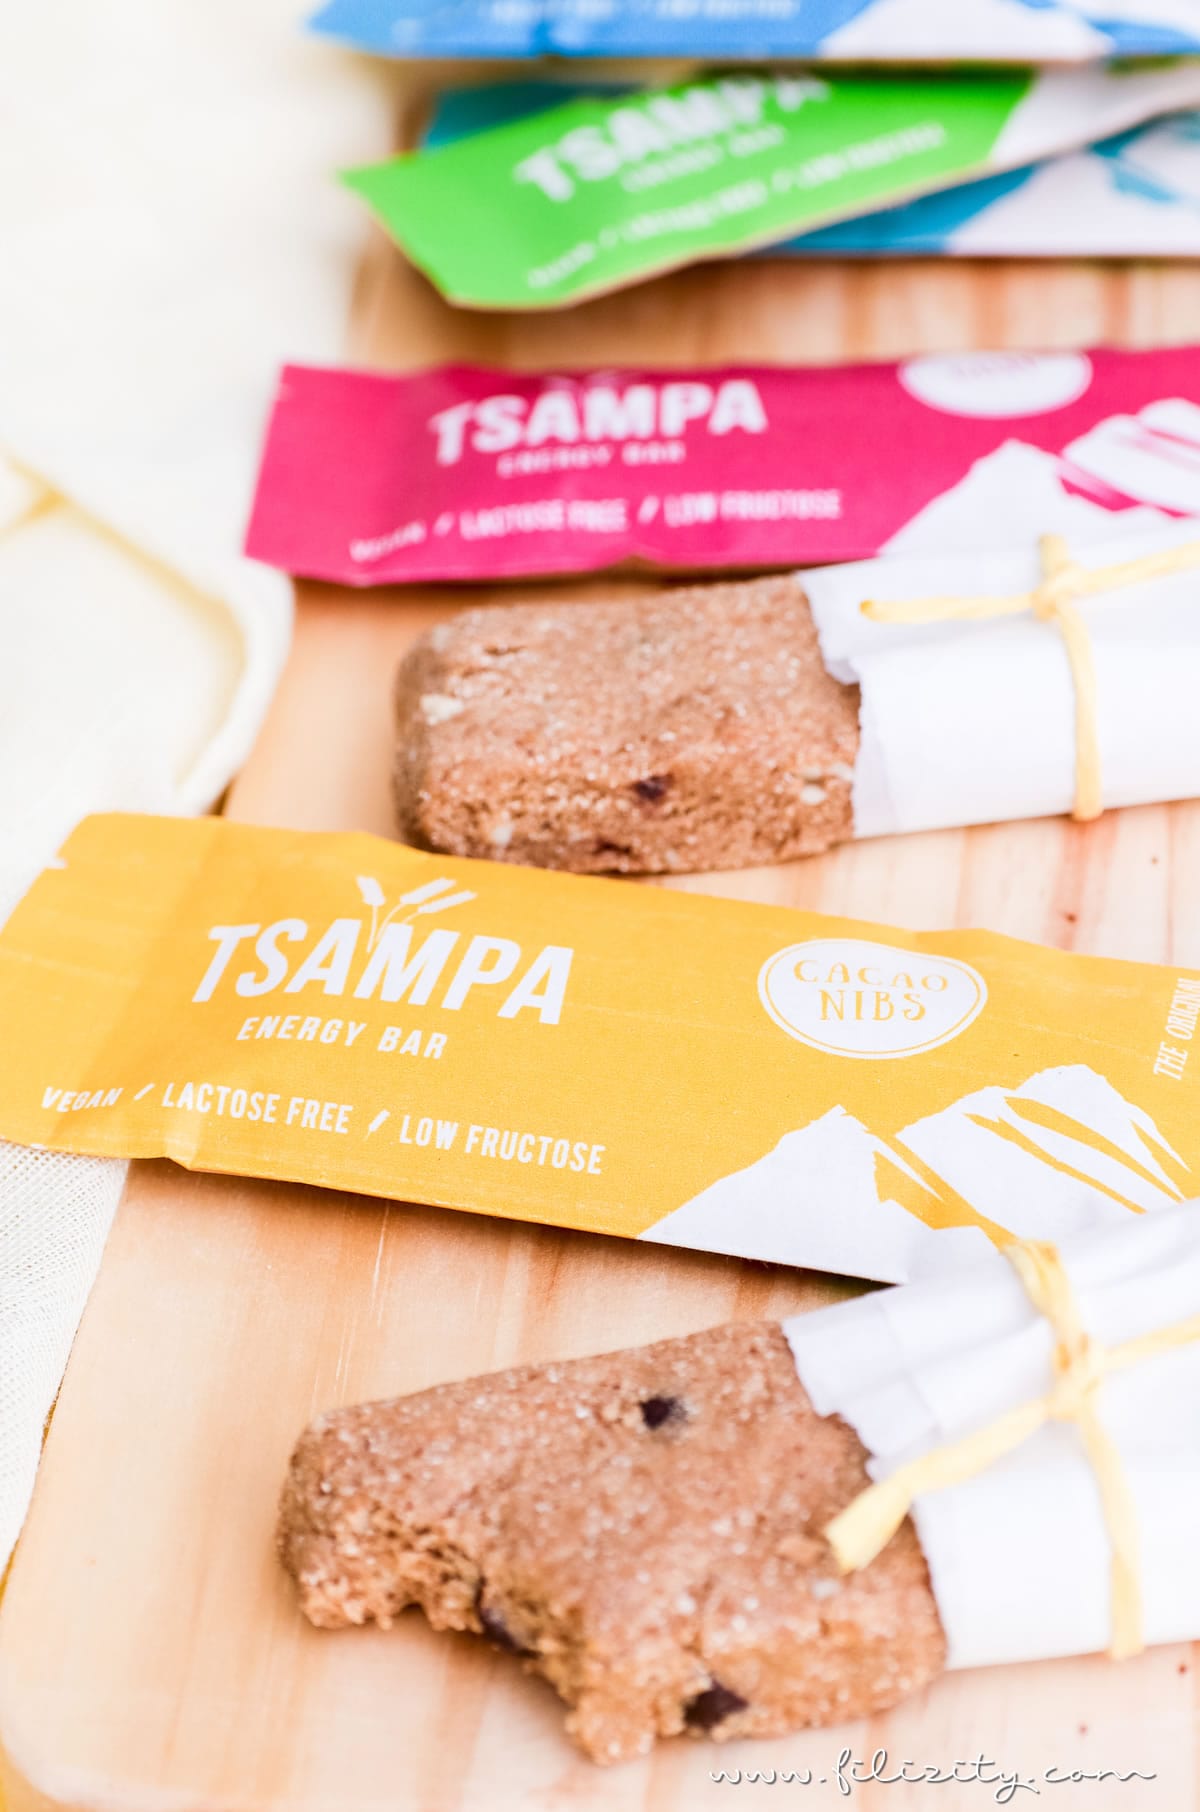 TSAMPA Energieriegel & DIY Energy Snack Set | Filizity.com | Food-Blog aus dem Rheinland #tsampa #energybar #vegan #glutenfrei #laktosefrei #bio